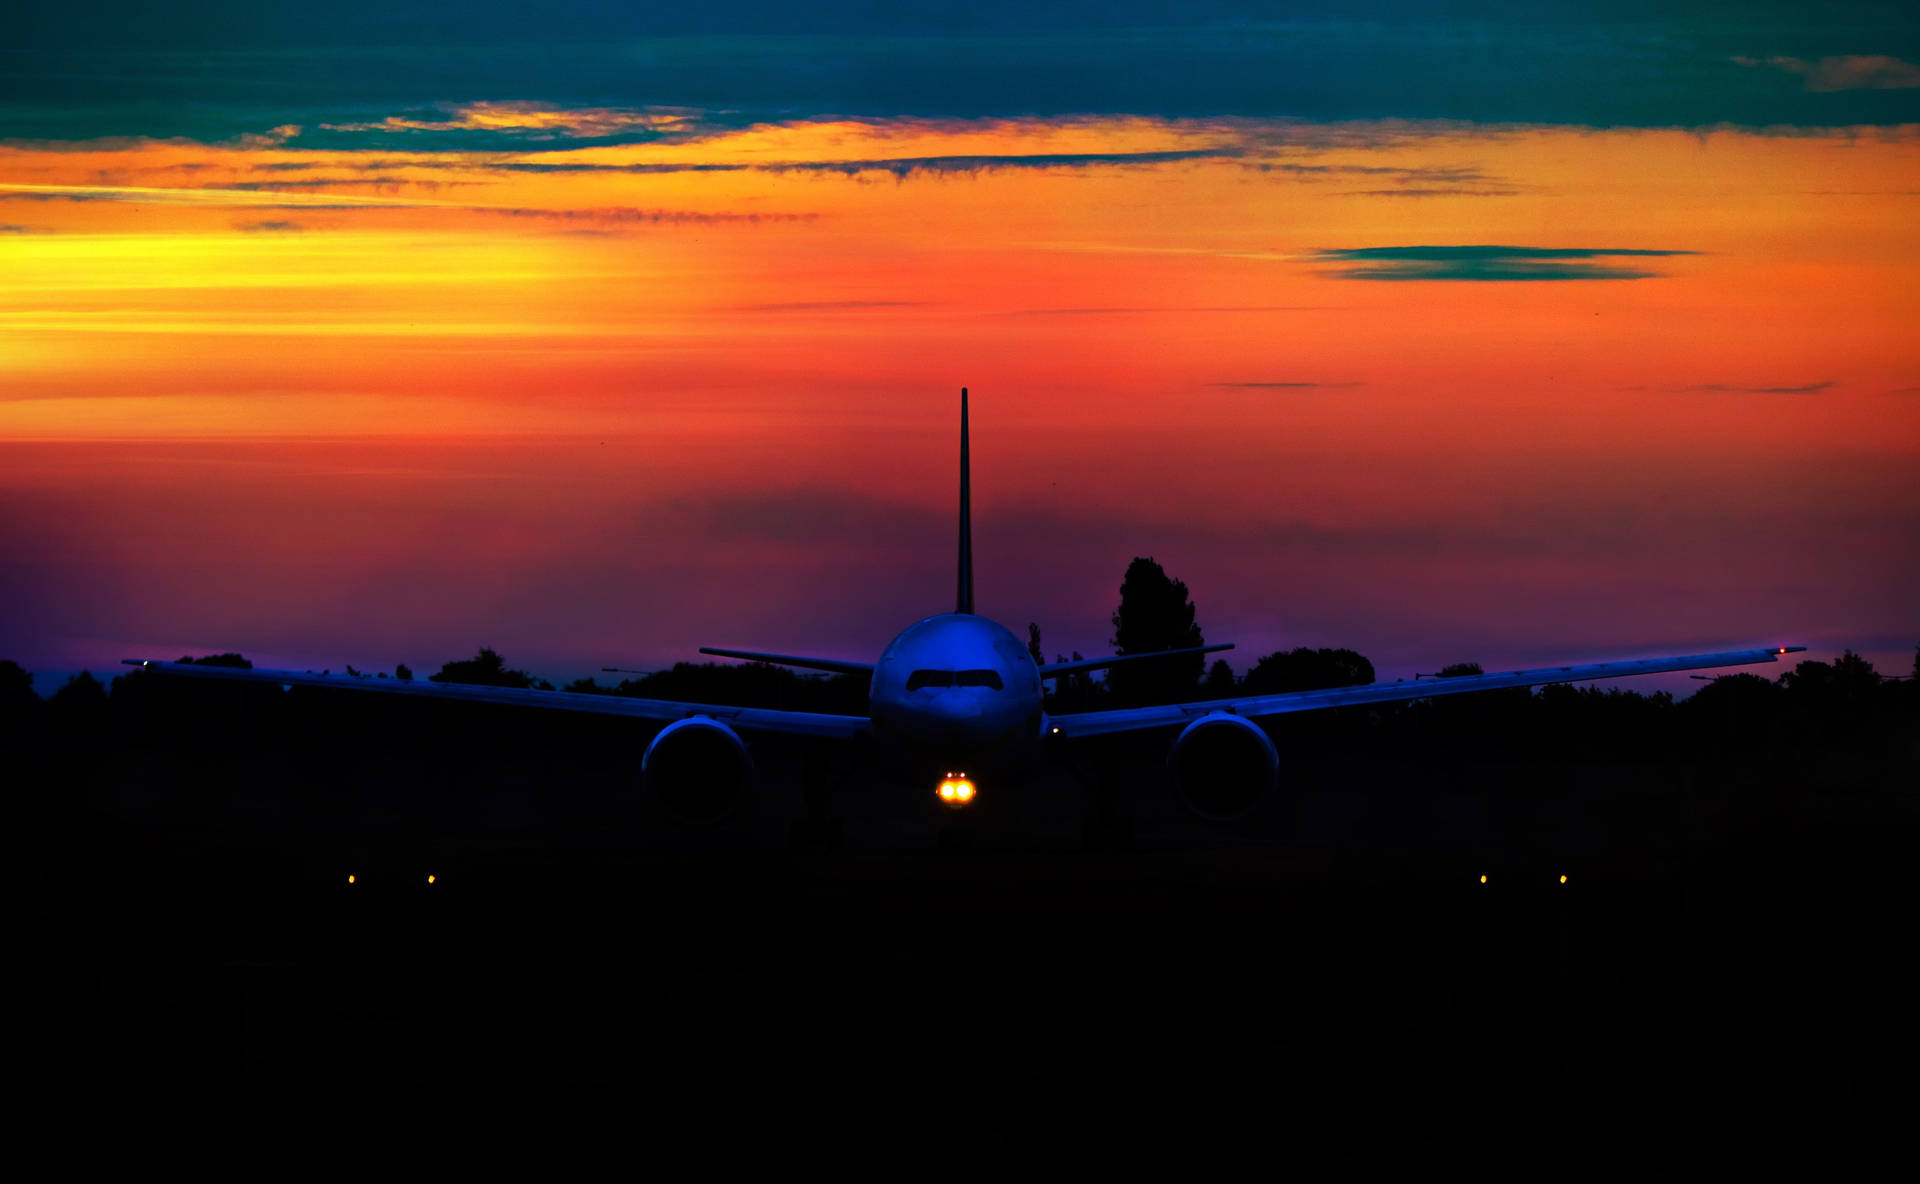 Beautiful Sunset Photo Of Airplane 4K Wallpaper